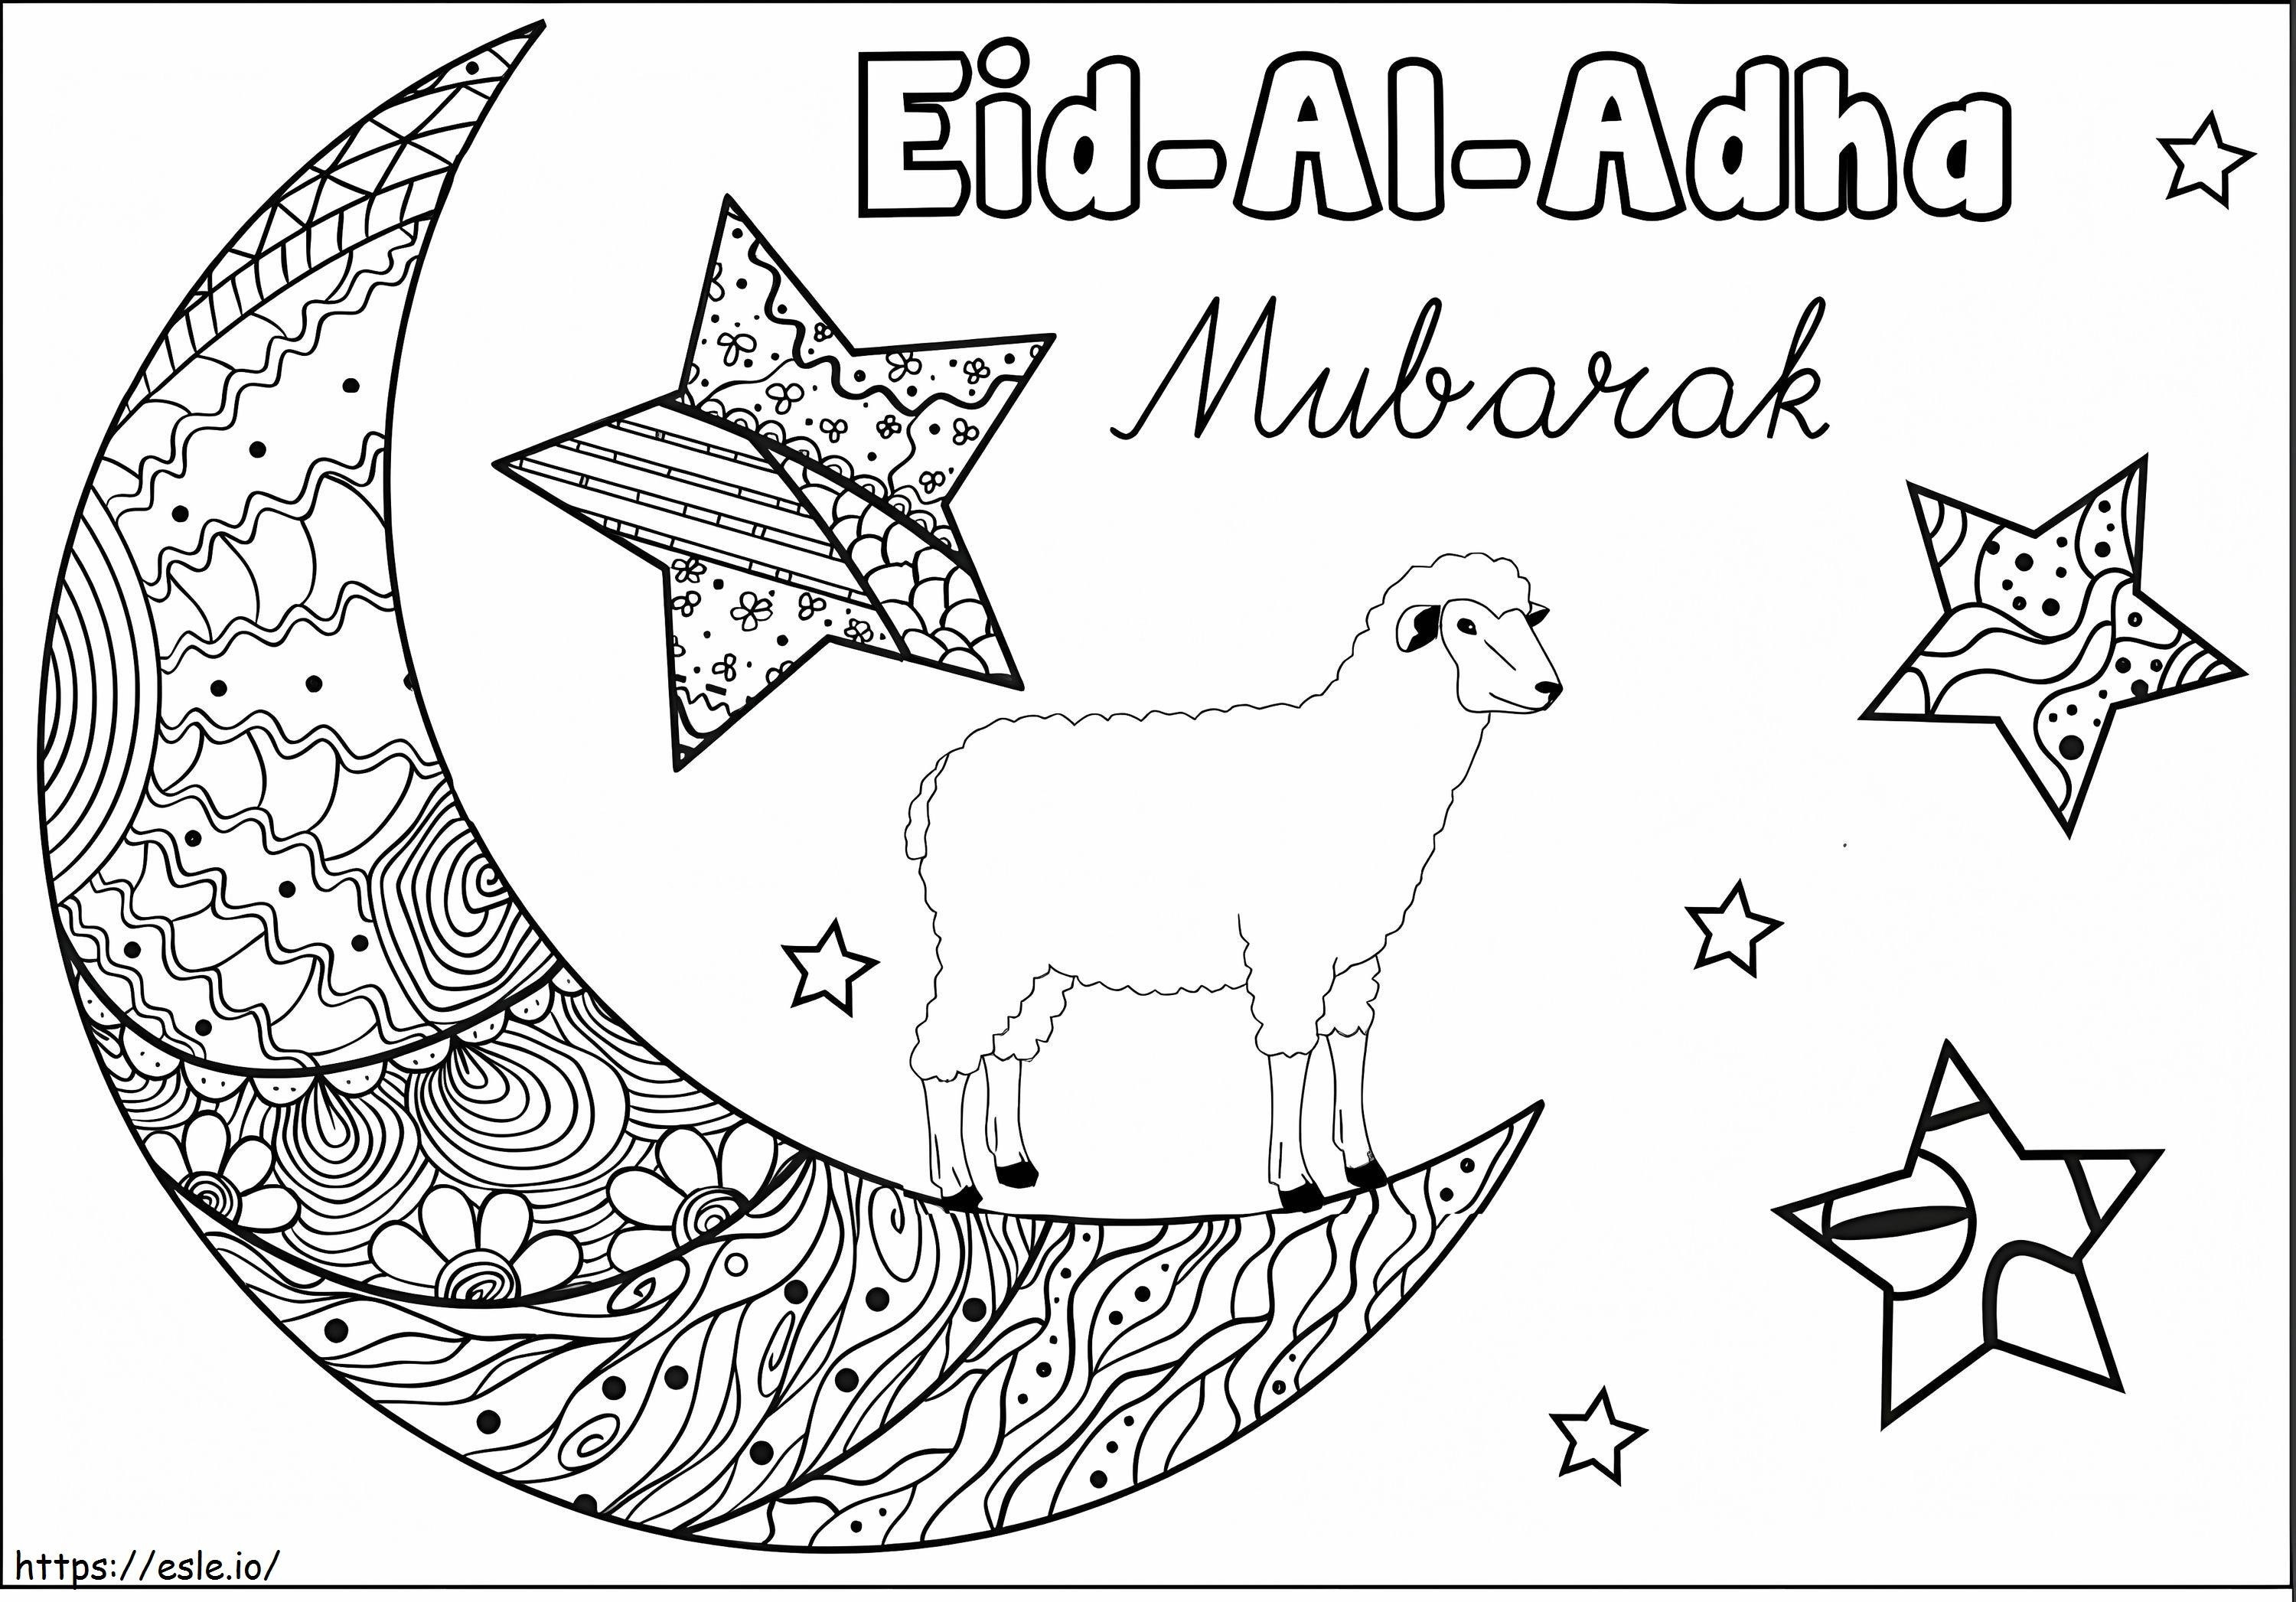 Eid Al-Adha Mubarak 8 ausmalbilder